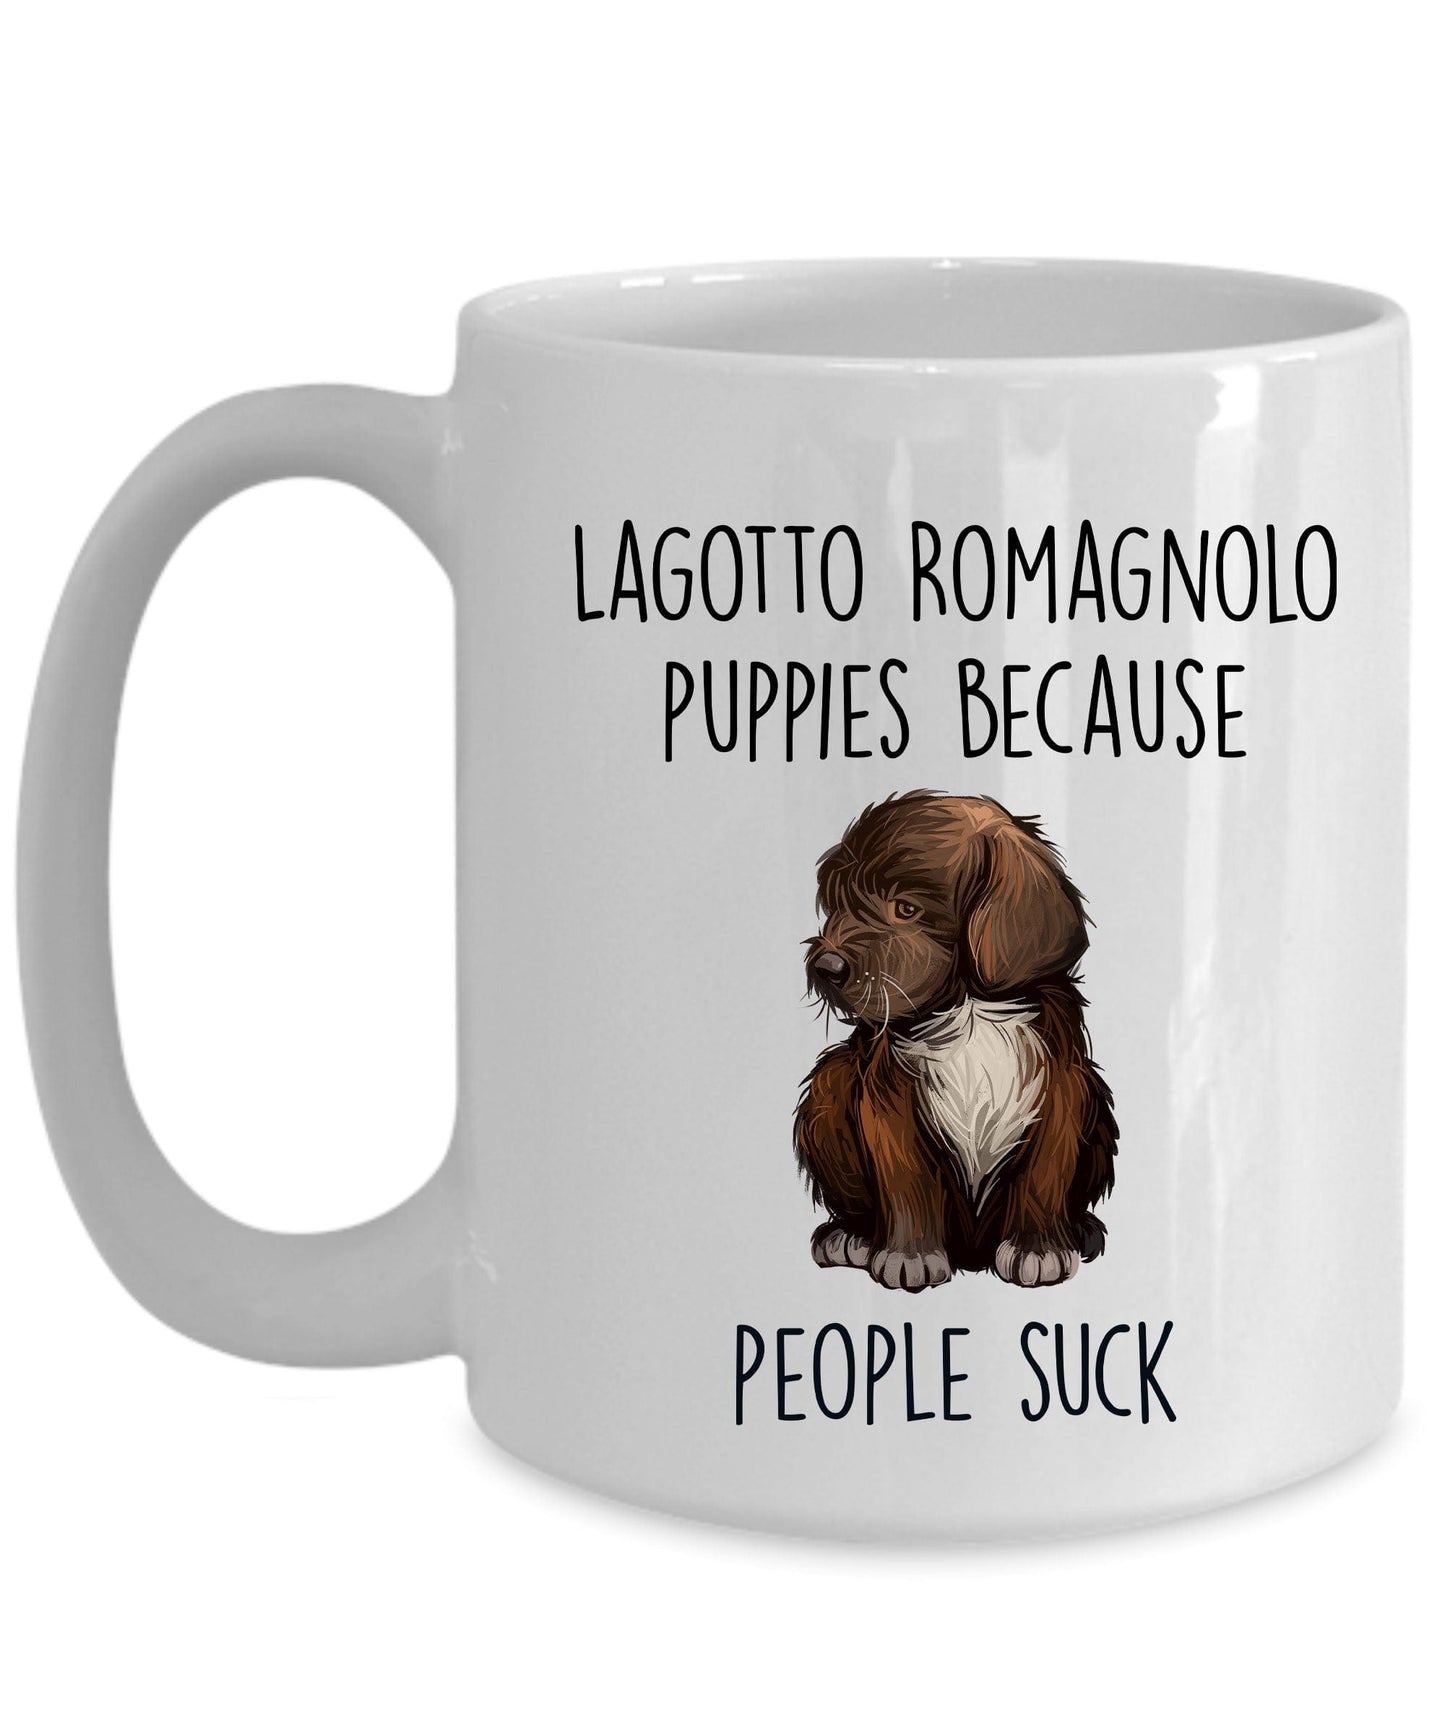 Lagotto Romagnolo Dog Lover ceramic coffee mug - Lagotto Romagnolo puppies because people suck